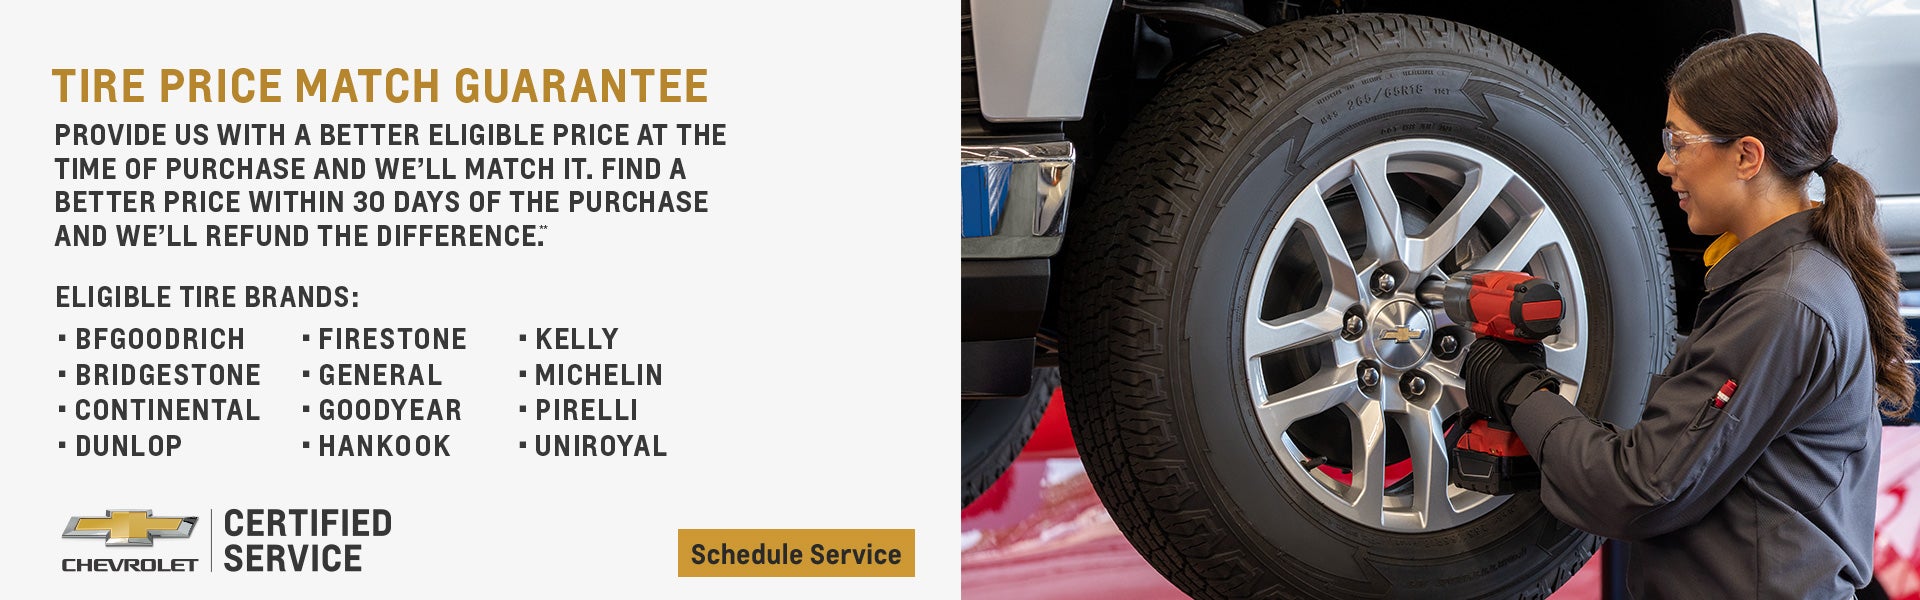 schedule service tire match deal